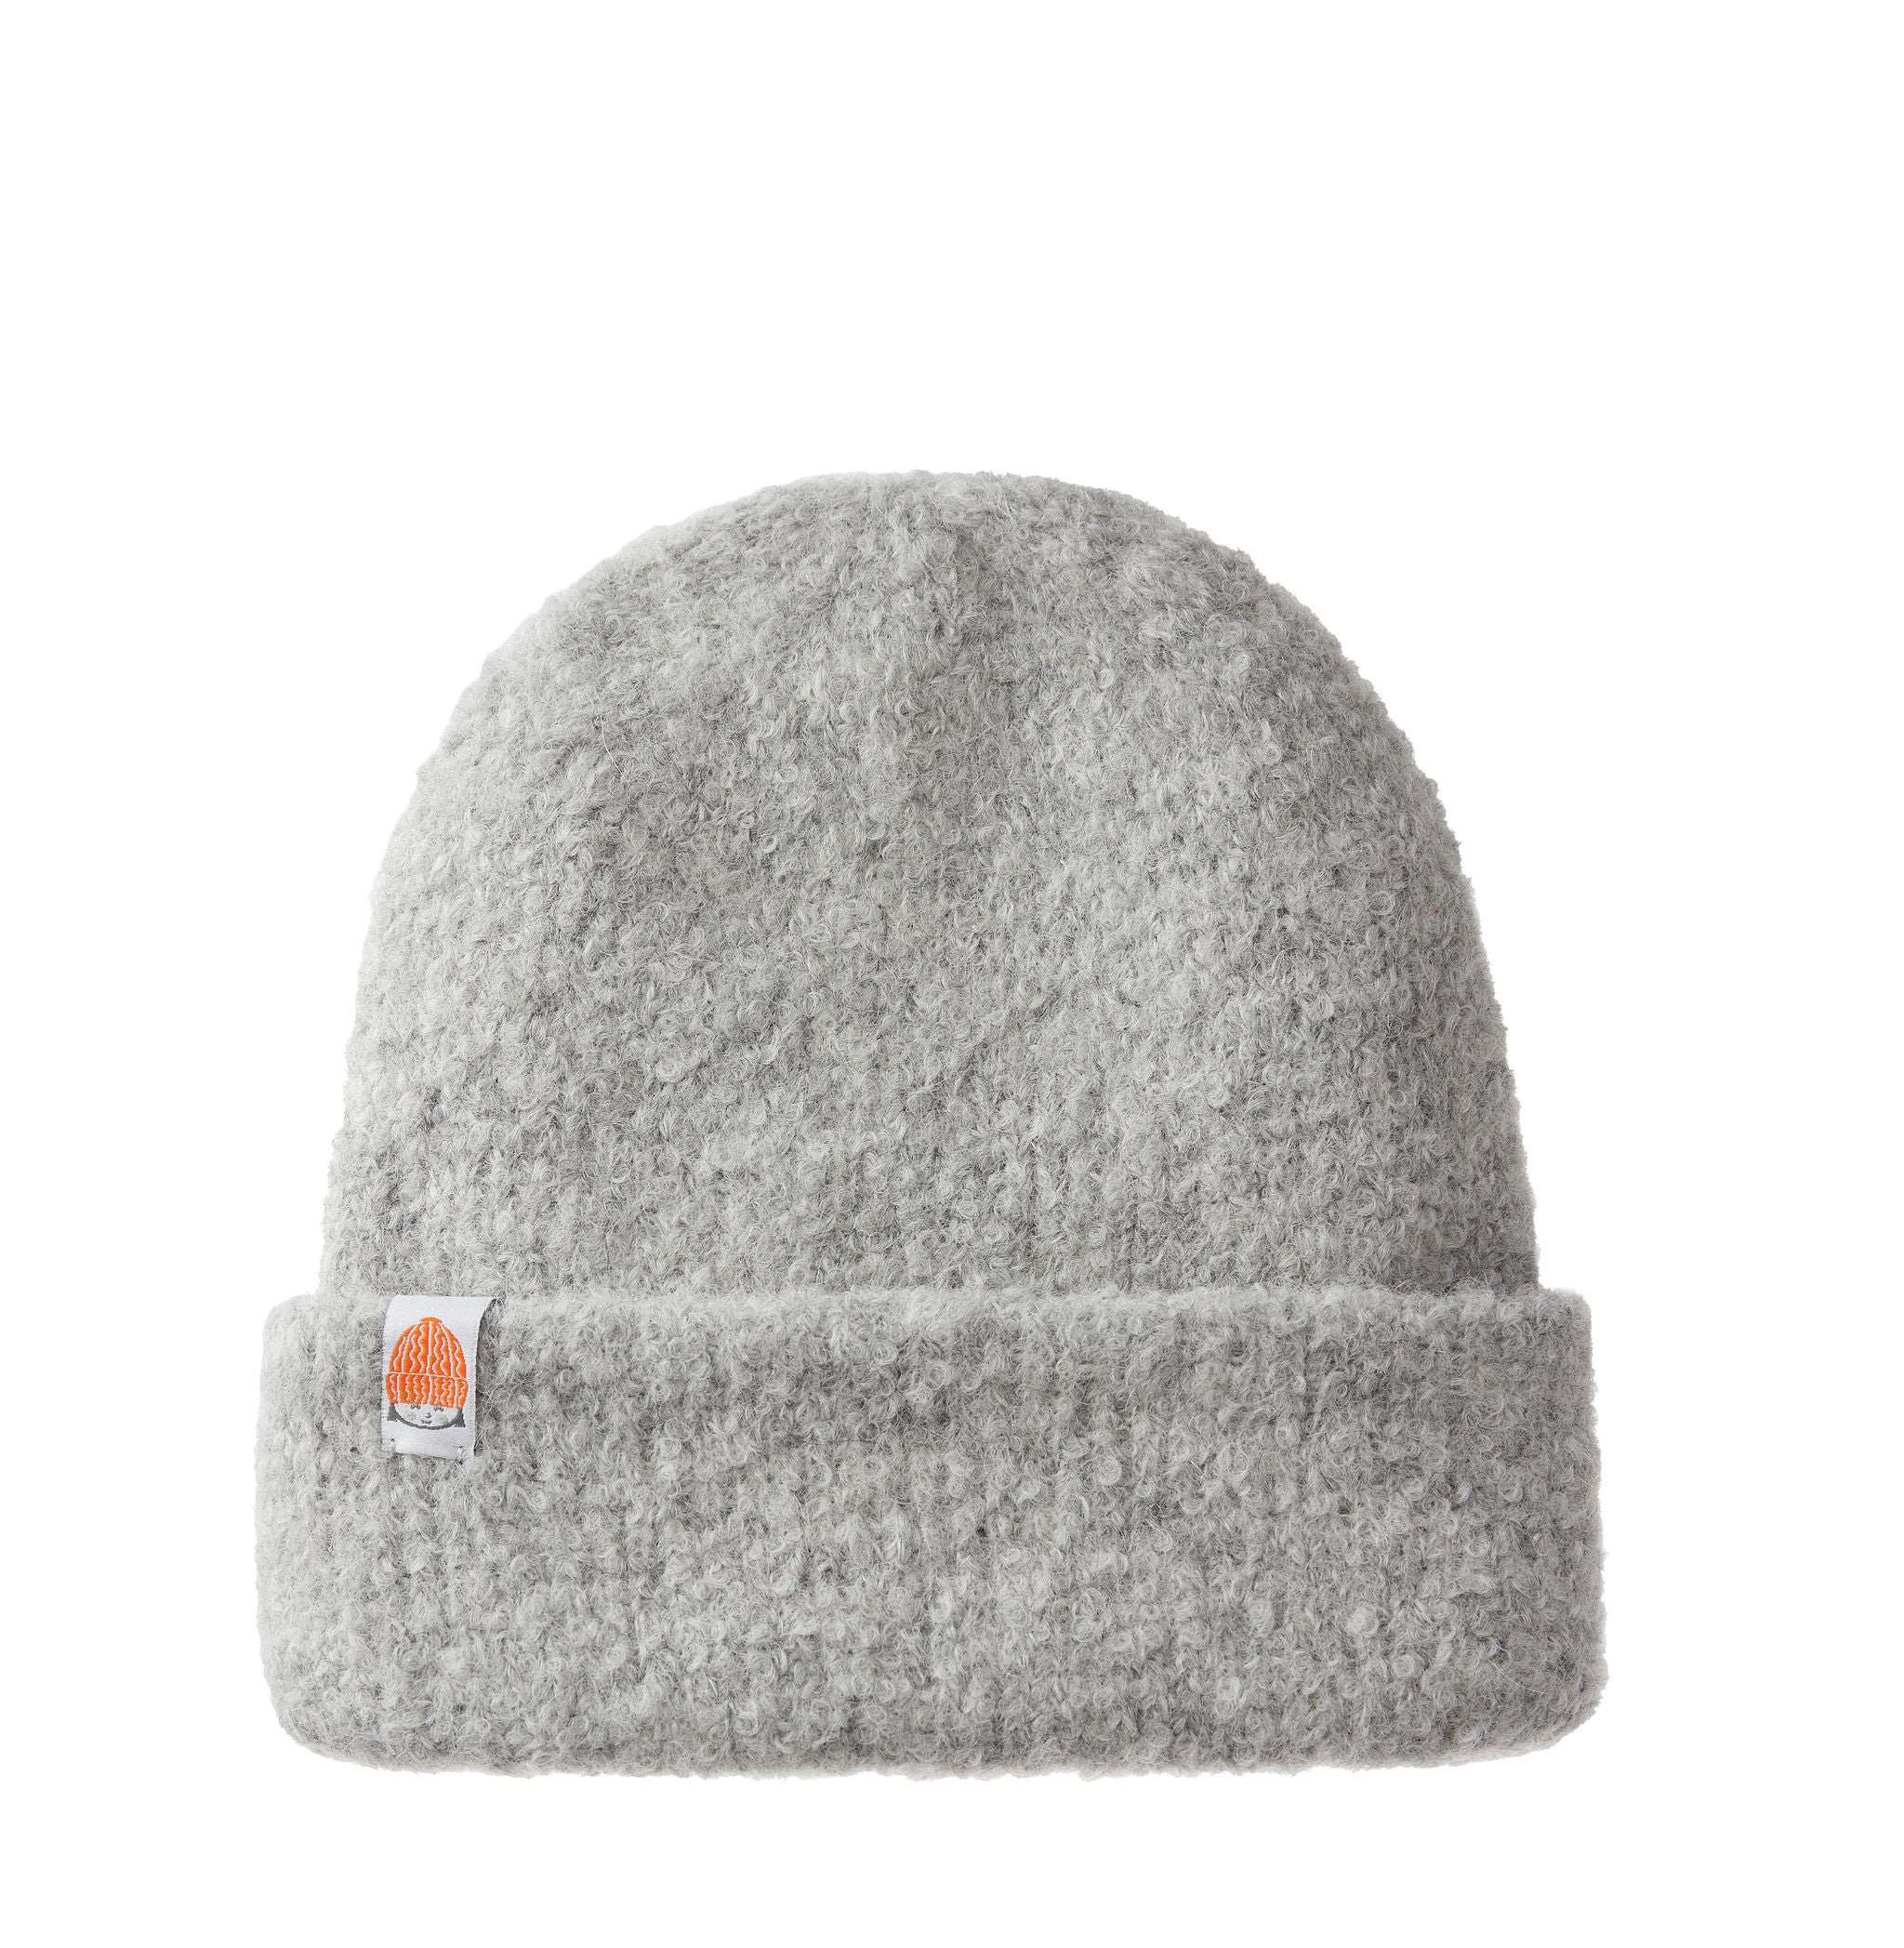 The Teddy Beanie | Wool | That I Winter Sh*t Alpaca Knit Hats